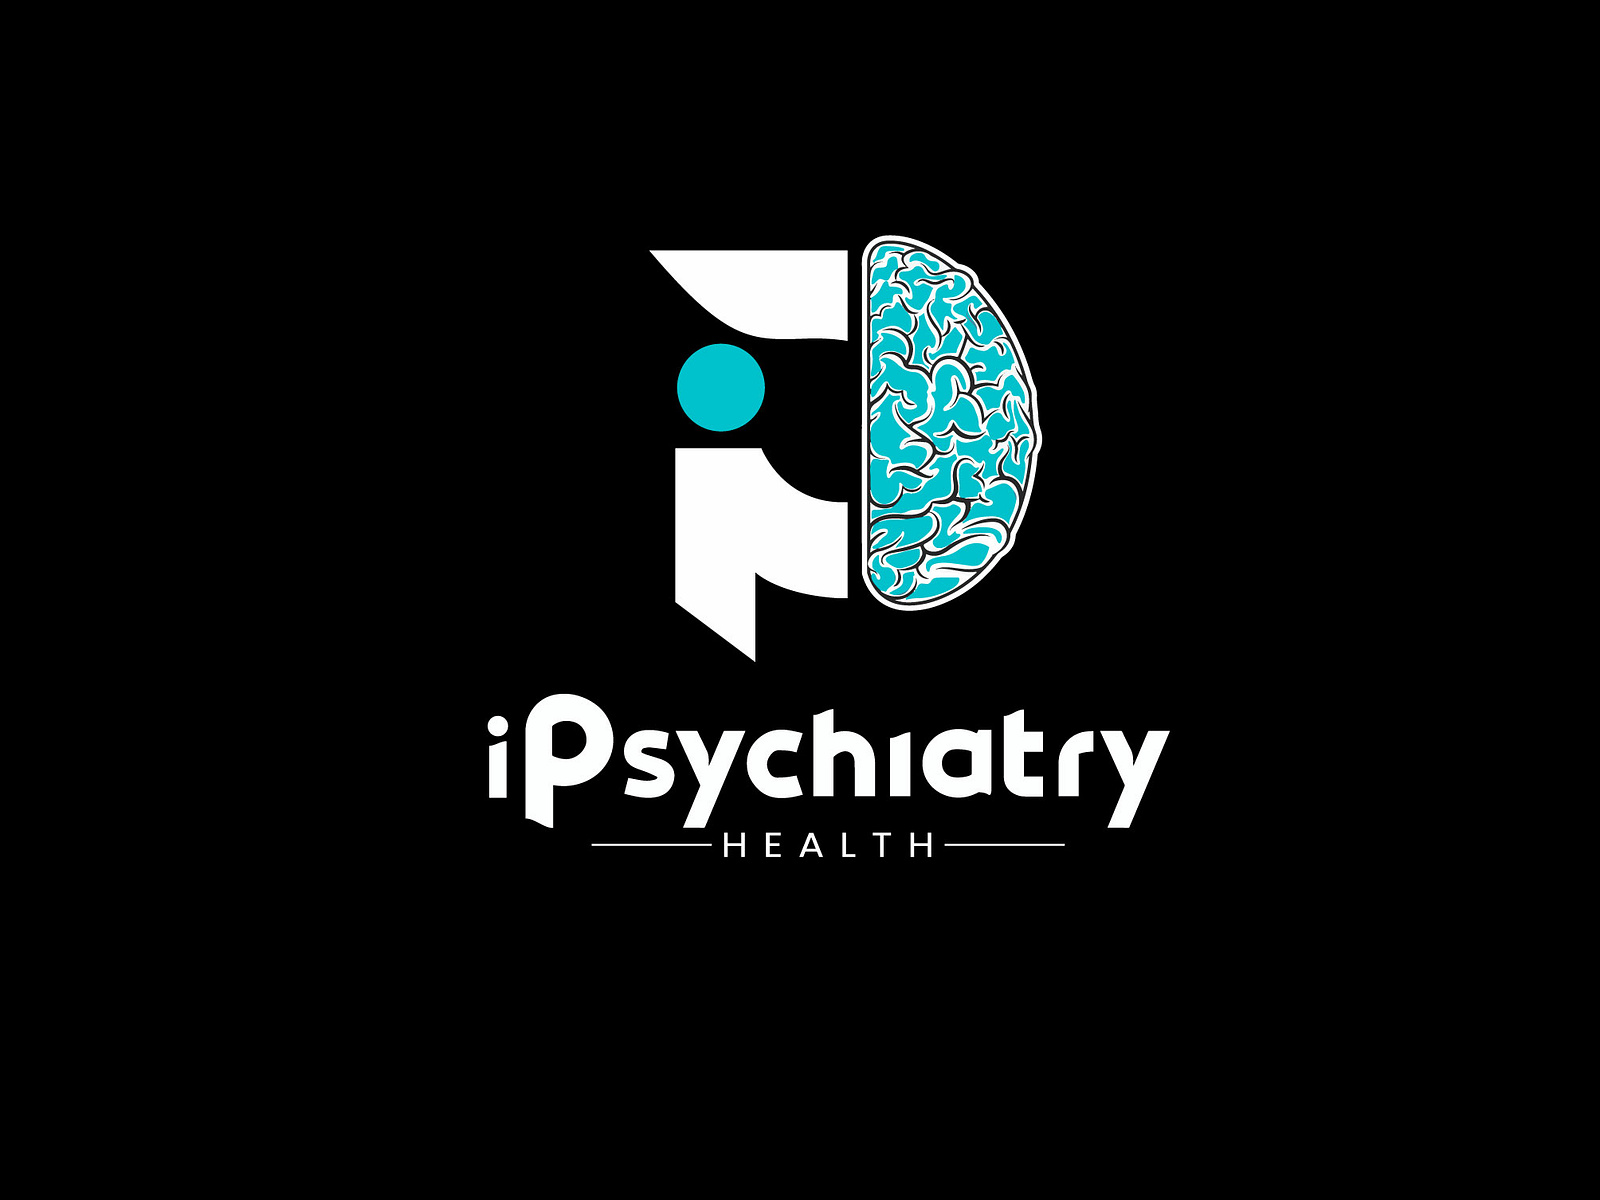 iPsychiatry Health Branding by Westcoast Animations on Dribbble